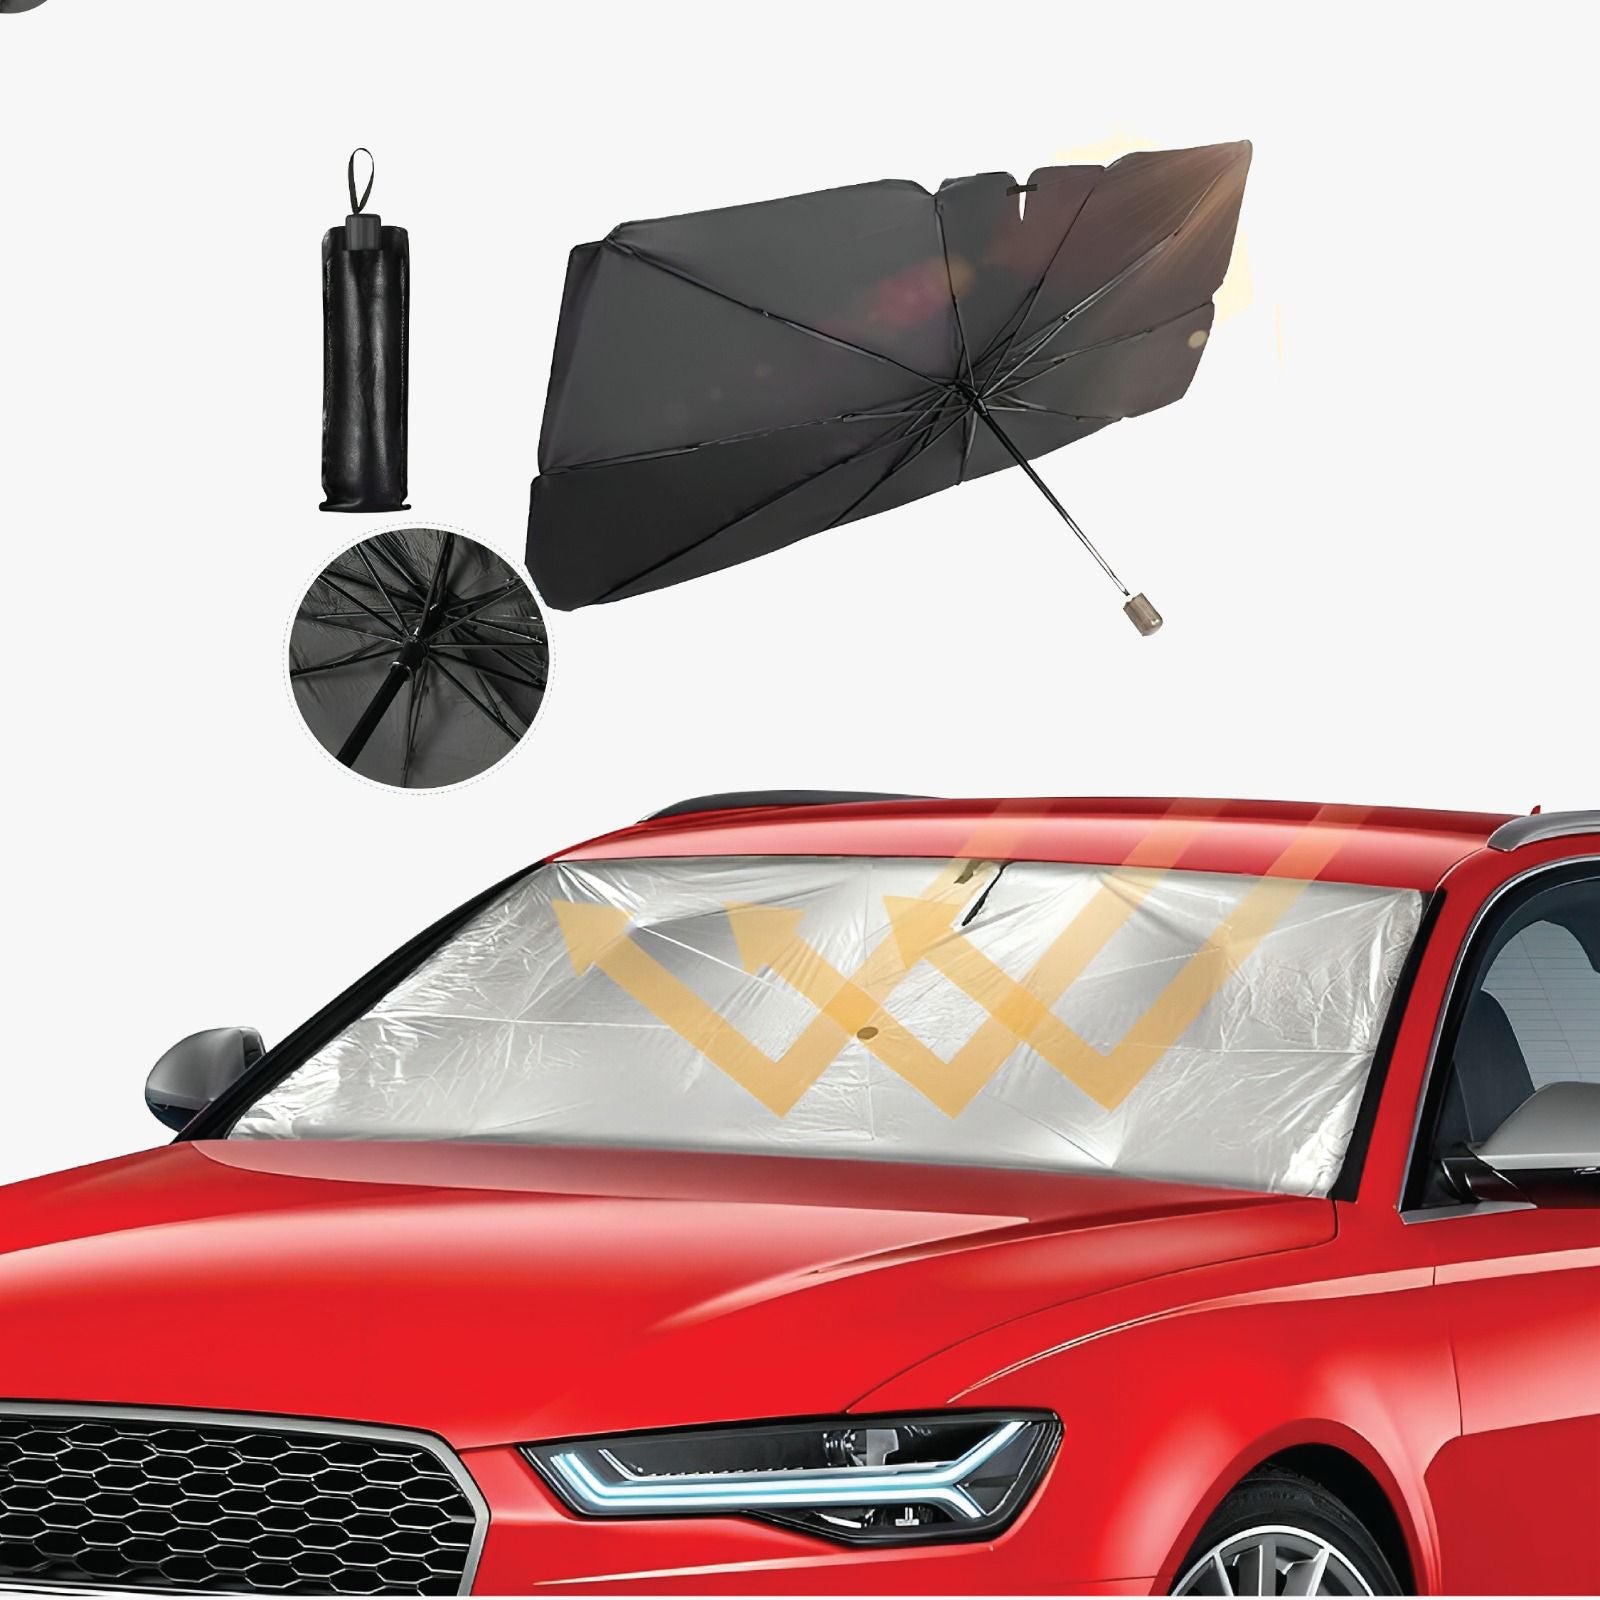 Green Lion Car Windshield Sunshade Umbrella: Ultimate UV Protection**